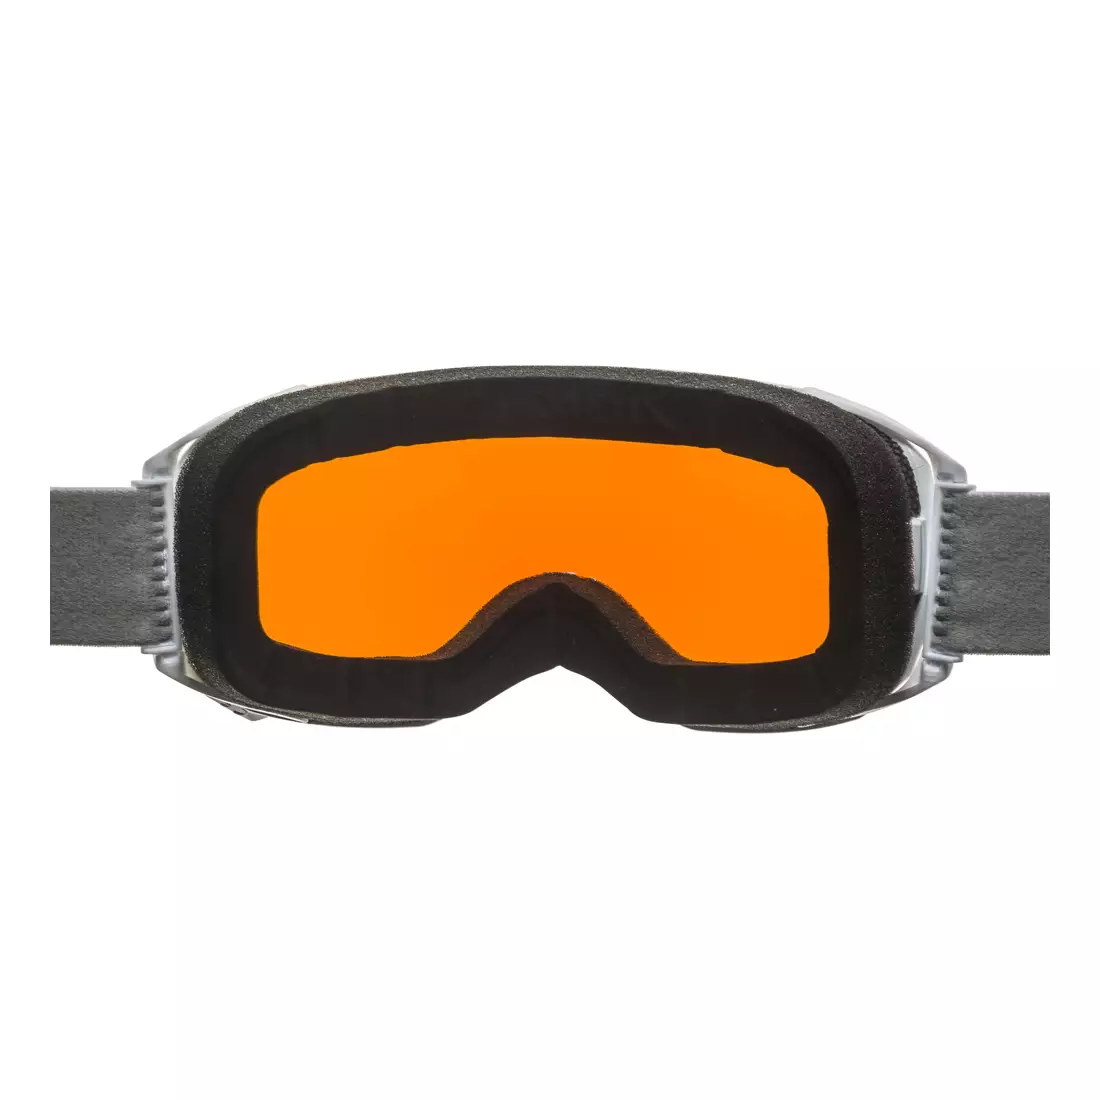 ALPINA BIG HORN Q-LITE lyžiarske/snowboardové okuliare, white gloss